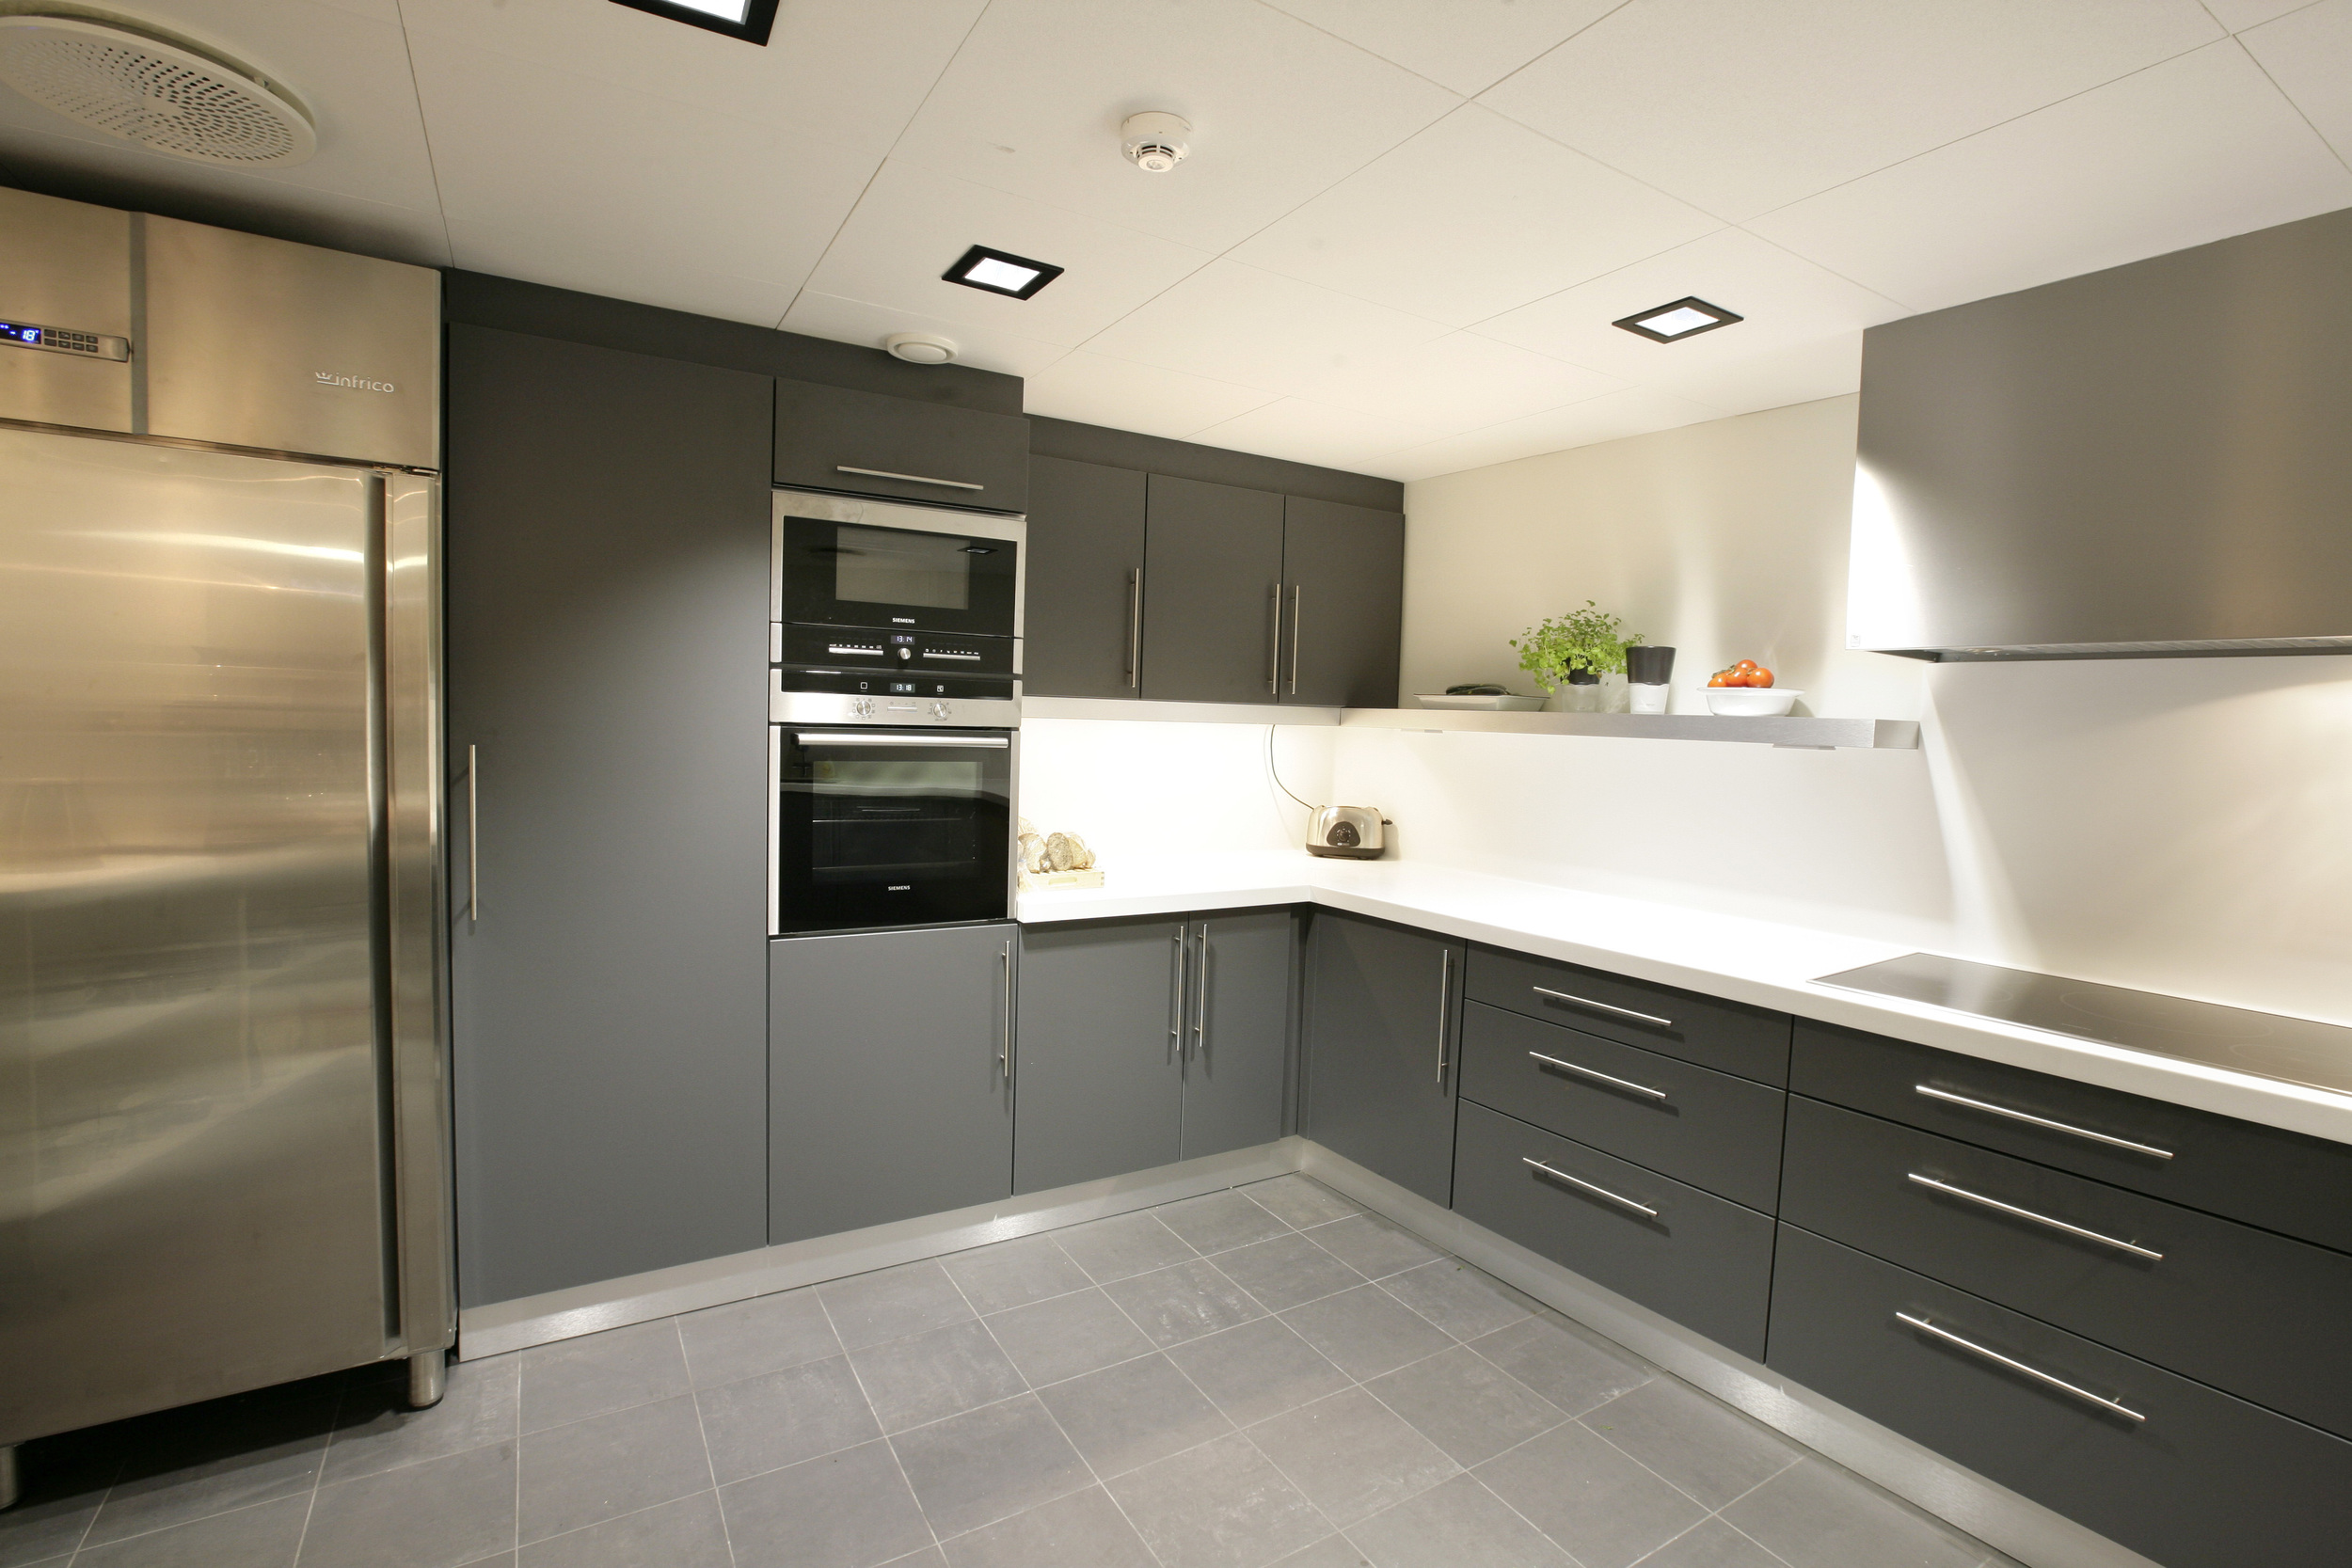  Kjøkken i stilfullt grå laminat med
Corianplater. 






  
  
   
   
  
  

  
  
   Normal 
   0 
   
   
   
   
   false 
   false 
   false 
   
   NO-BOK 
   JA 
   X-NONE 
   
    
    
    
    
    
    
    
    
    
   
   
    
    
  